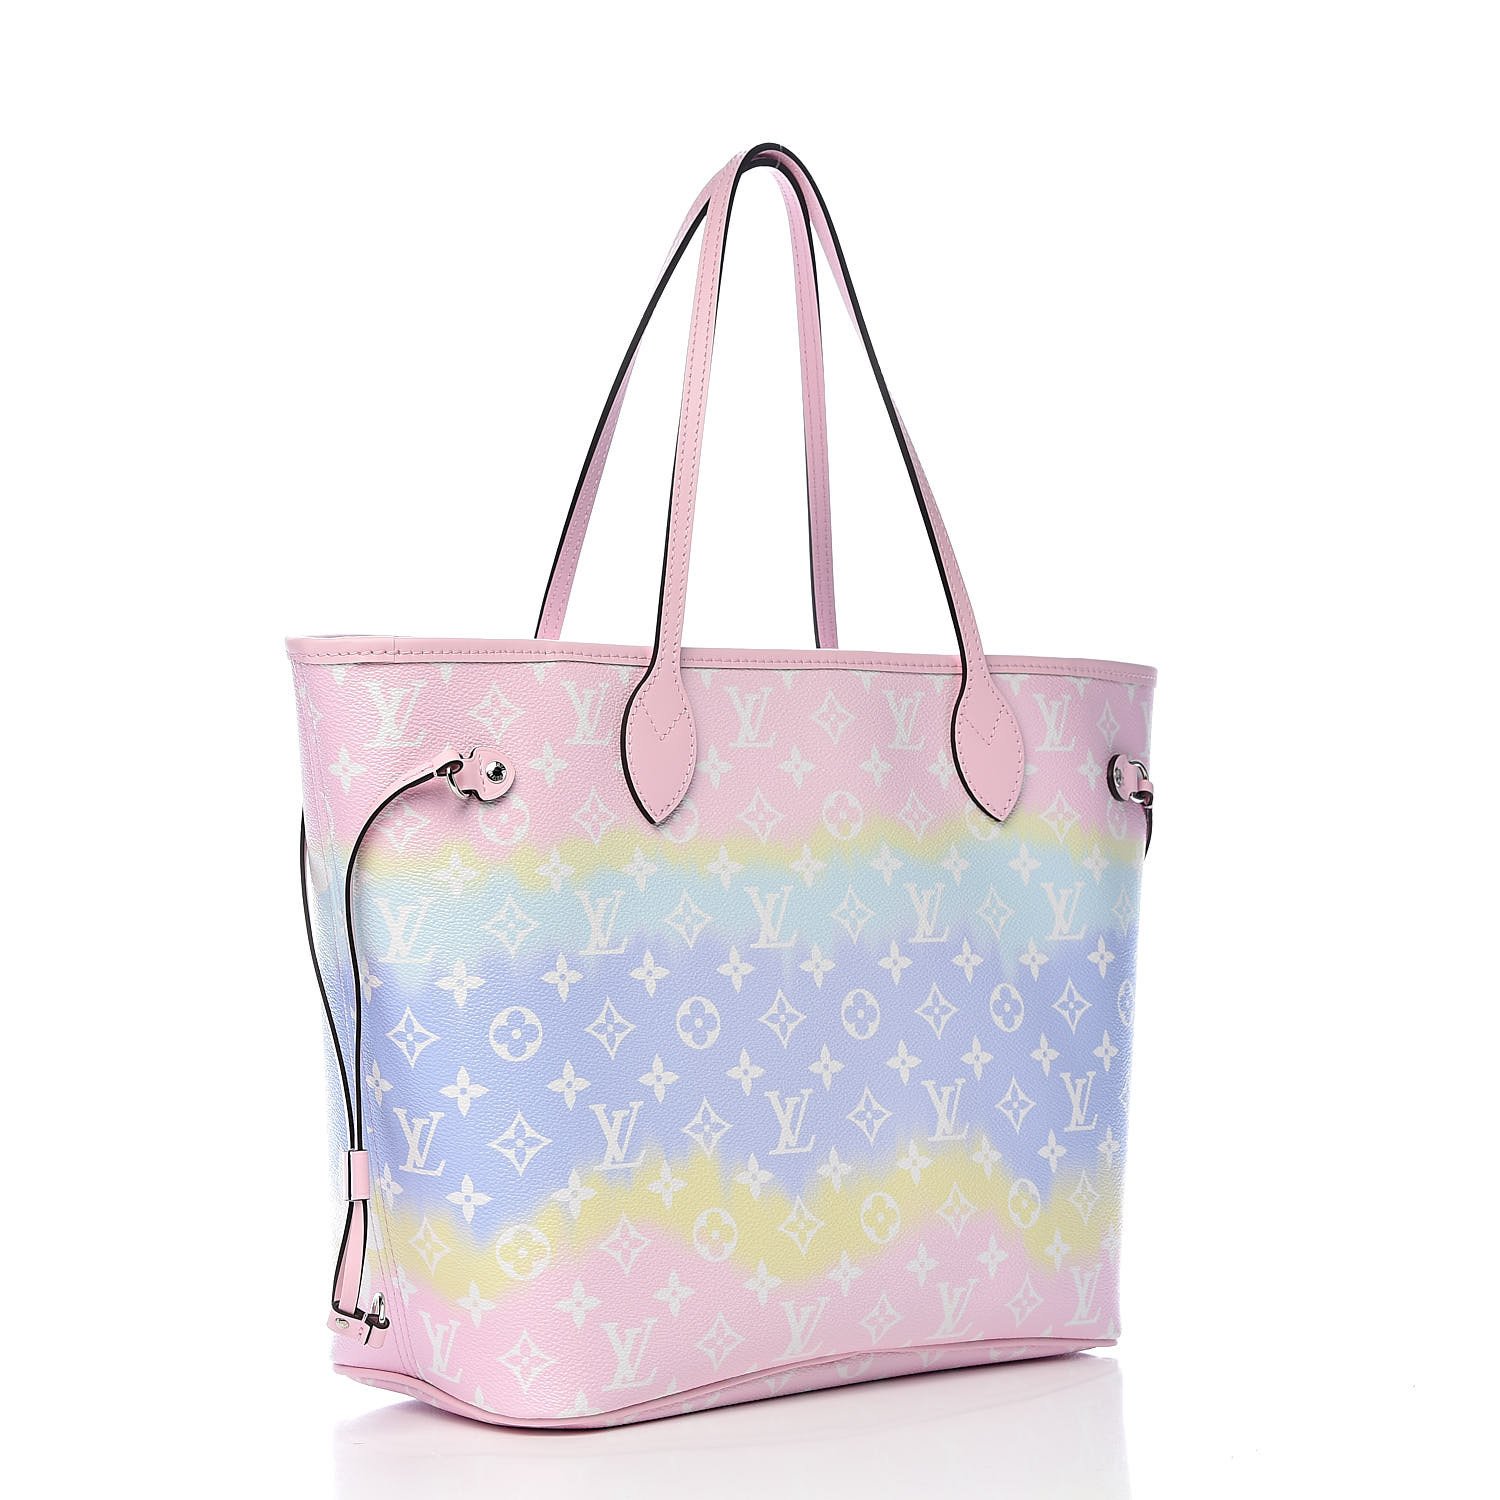 Louis Vuitton Neverfull MM Sunrise Pastel Handbag Summer 2022. New